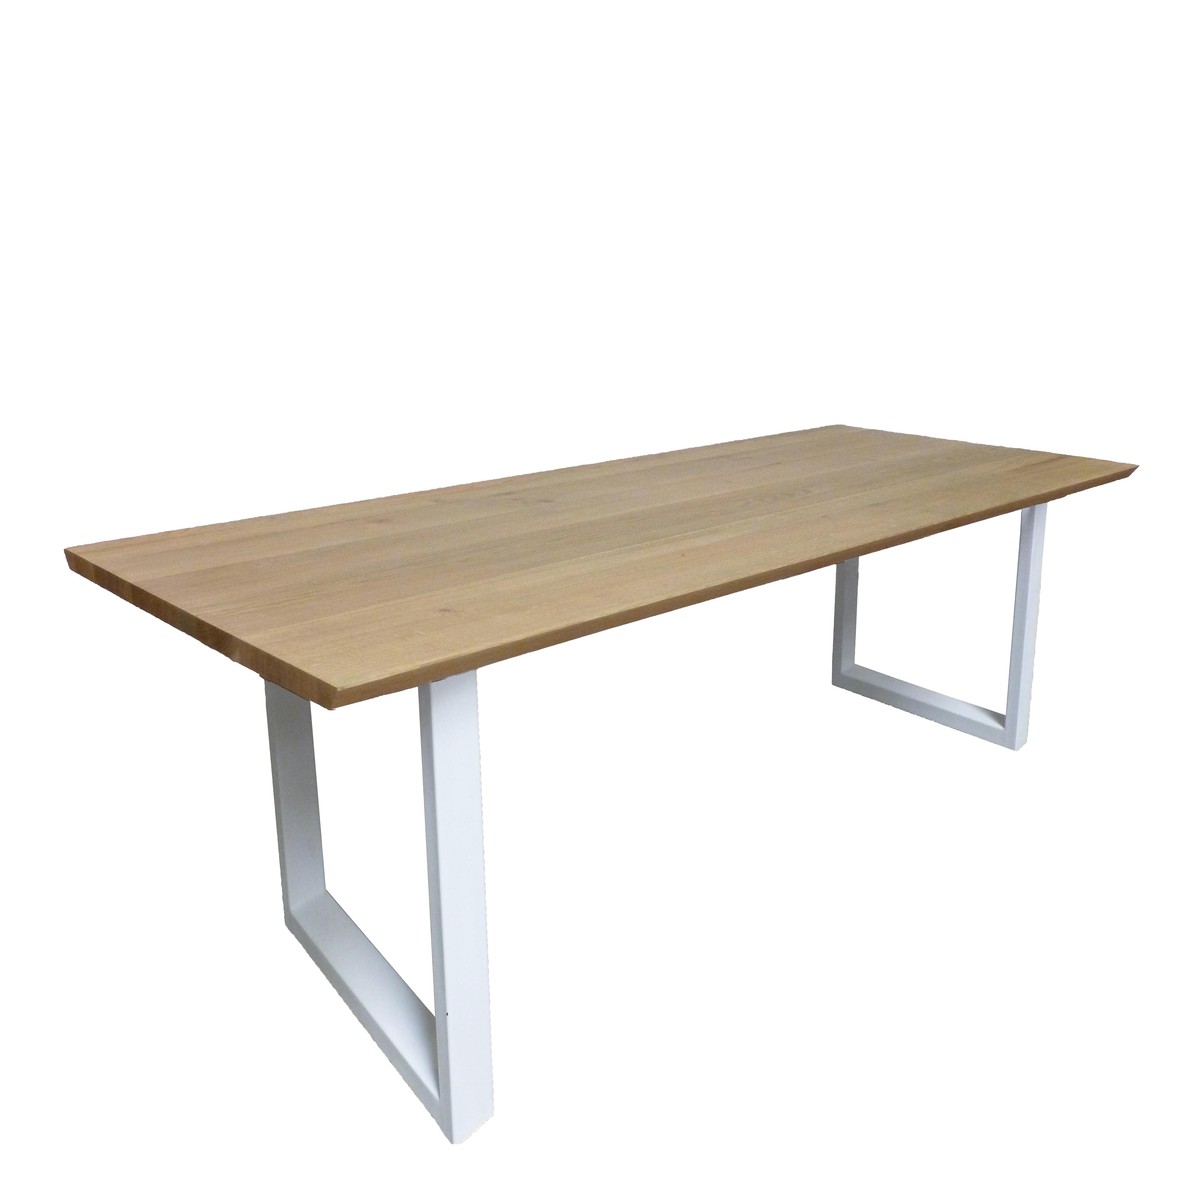   Table haute Retro Seven rectangulaire  160x100x90cm